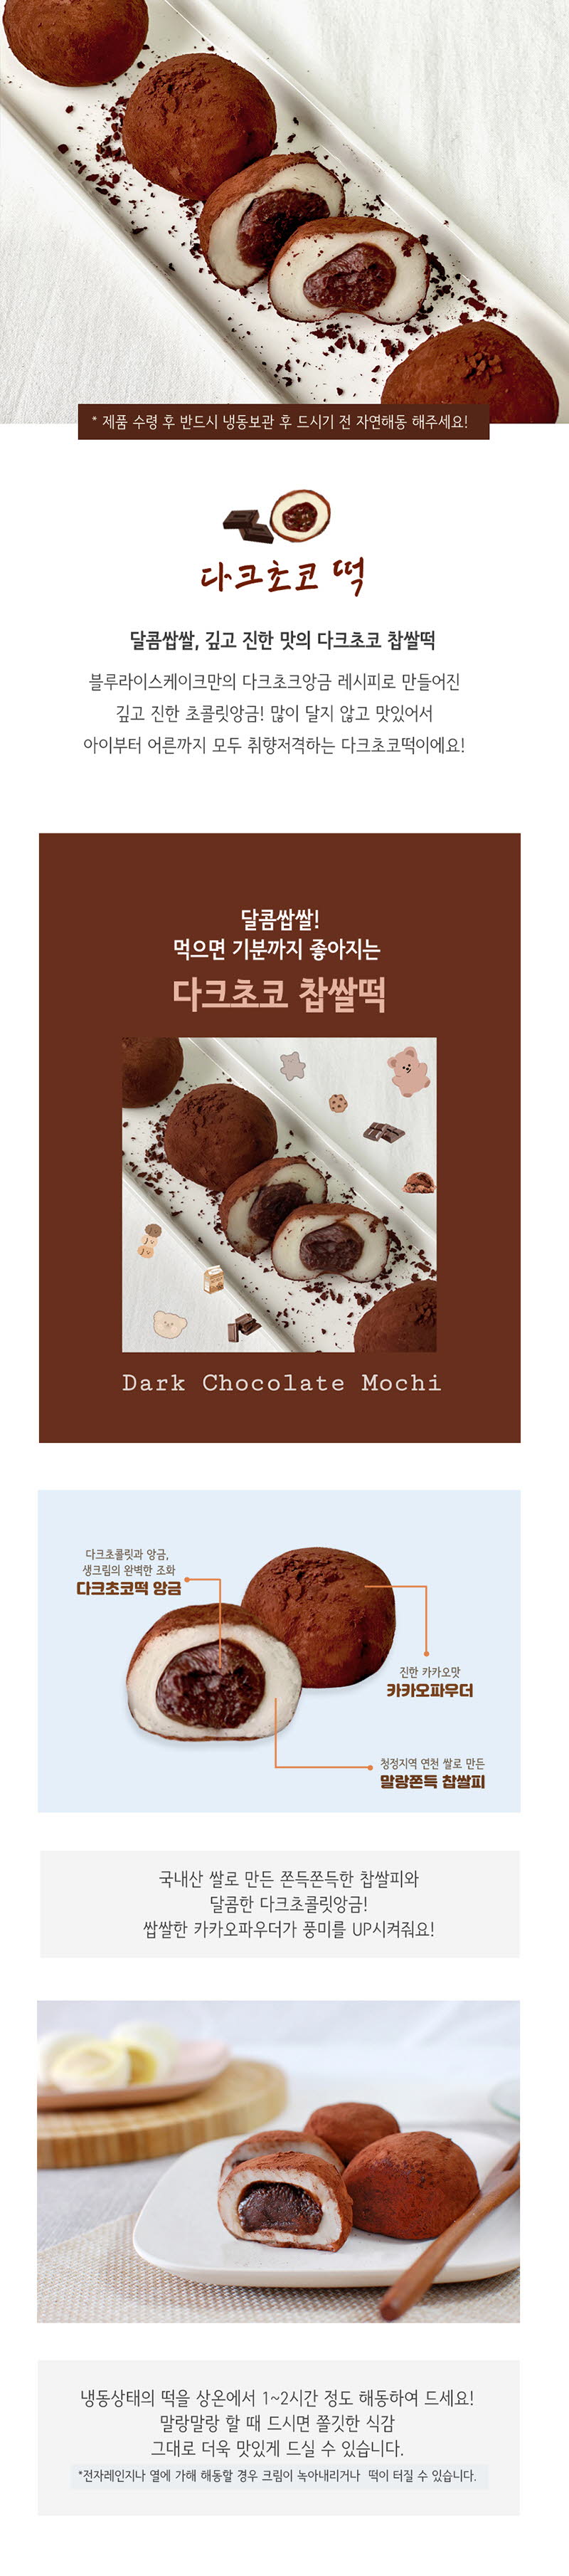 chocolate1-d.jpg